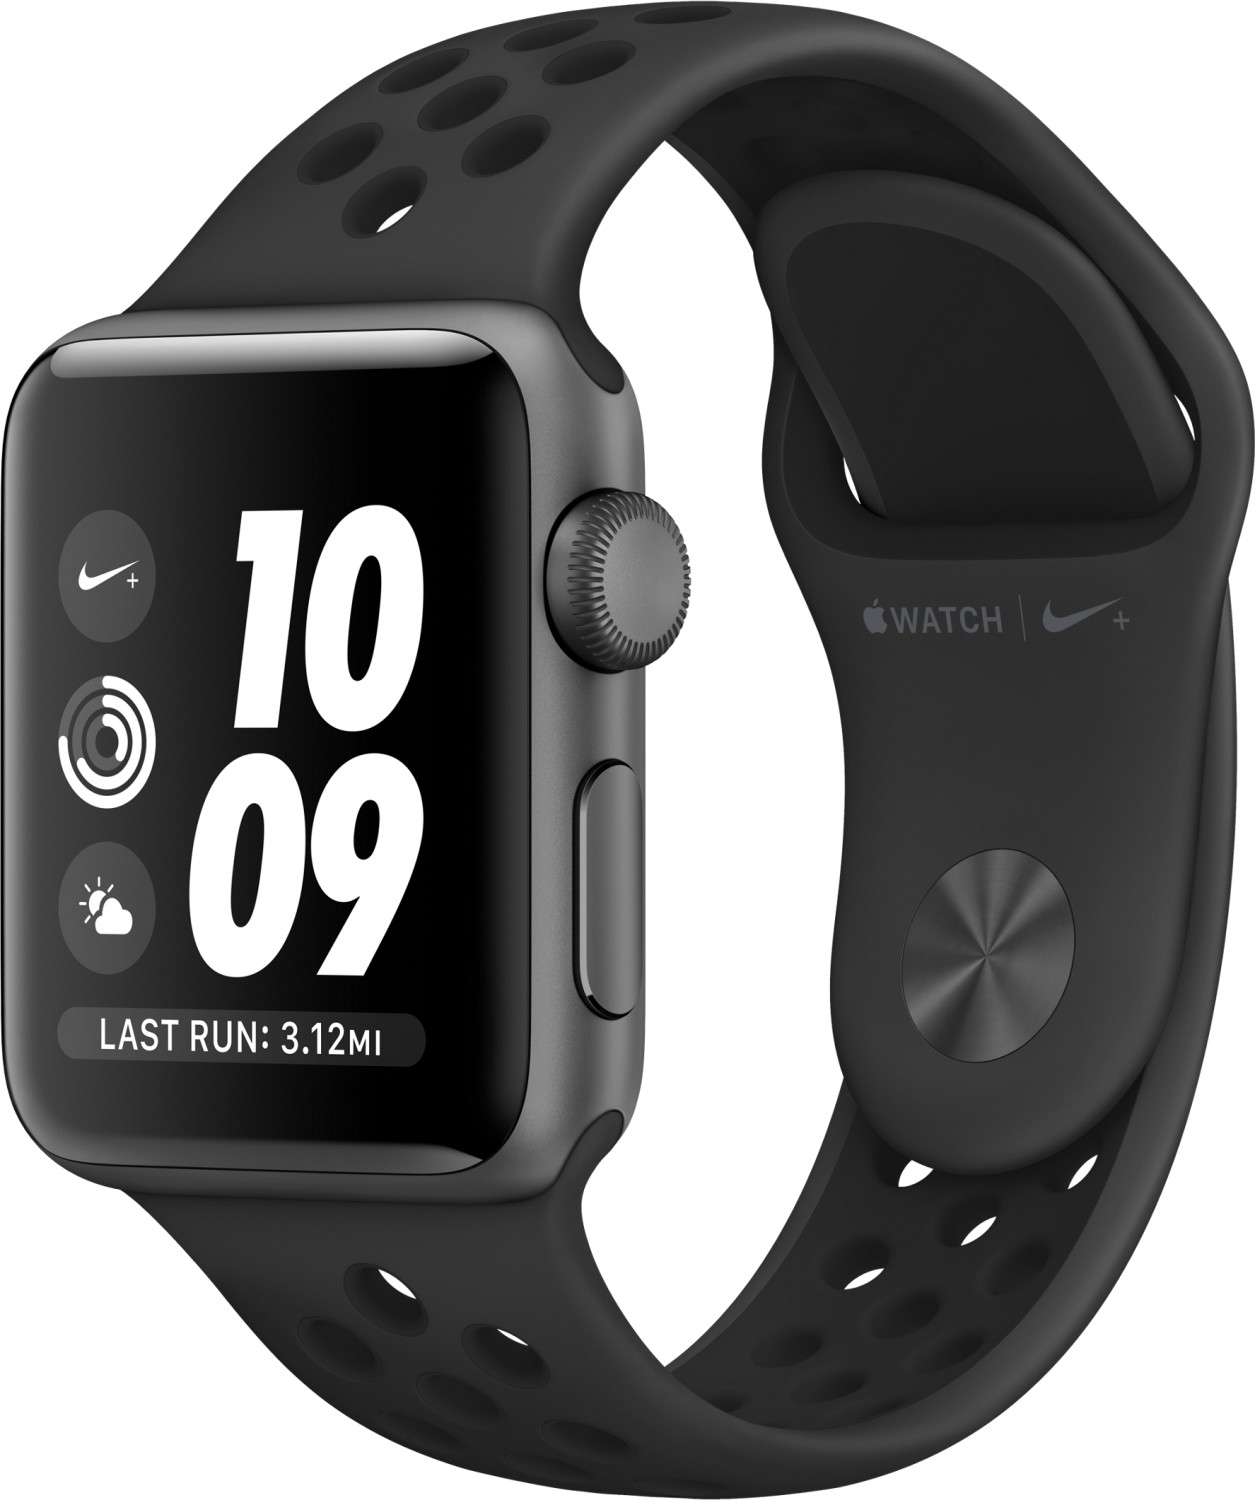 Apple Watch Series 3 Nike+ 42mm GPS Aluminiumgehäuse spacegrau mit Nike Sportarmband anthrazit/schwarz